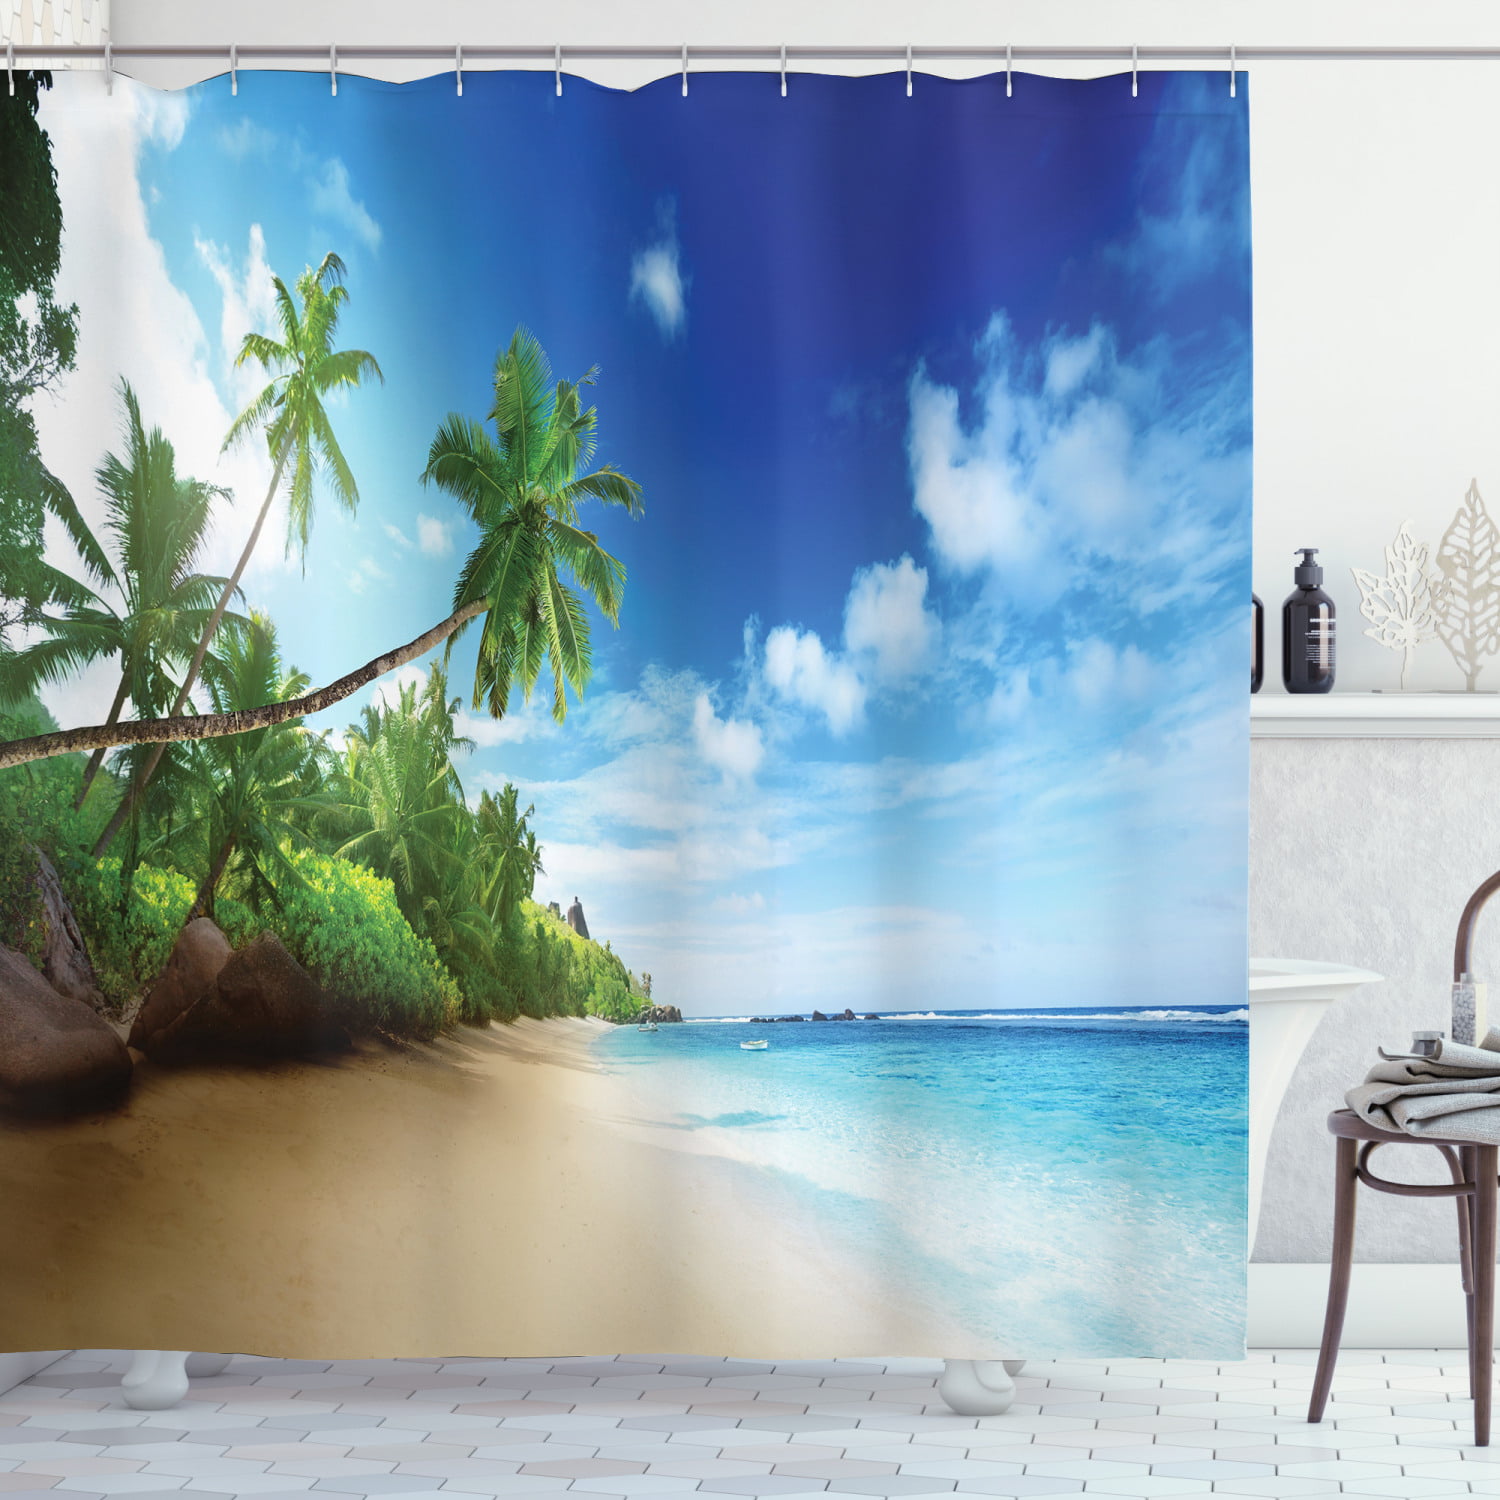 Waterproof Tropical Sea Beach Swimming Bathroom Fabric Shower Curtain Set Hooks 